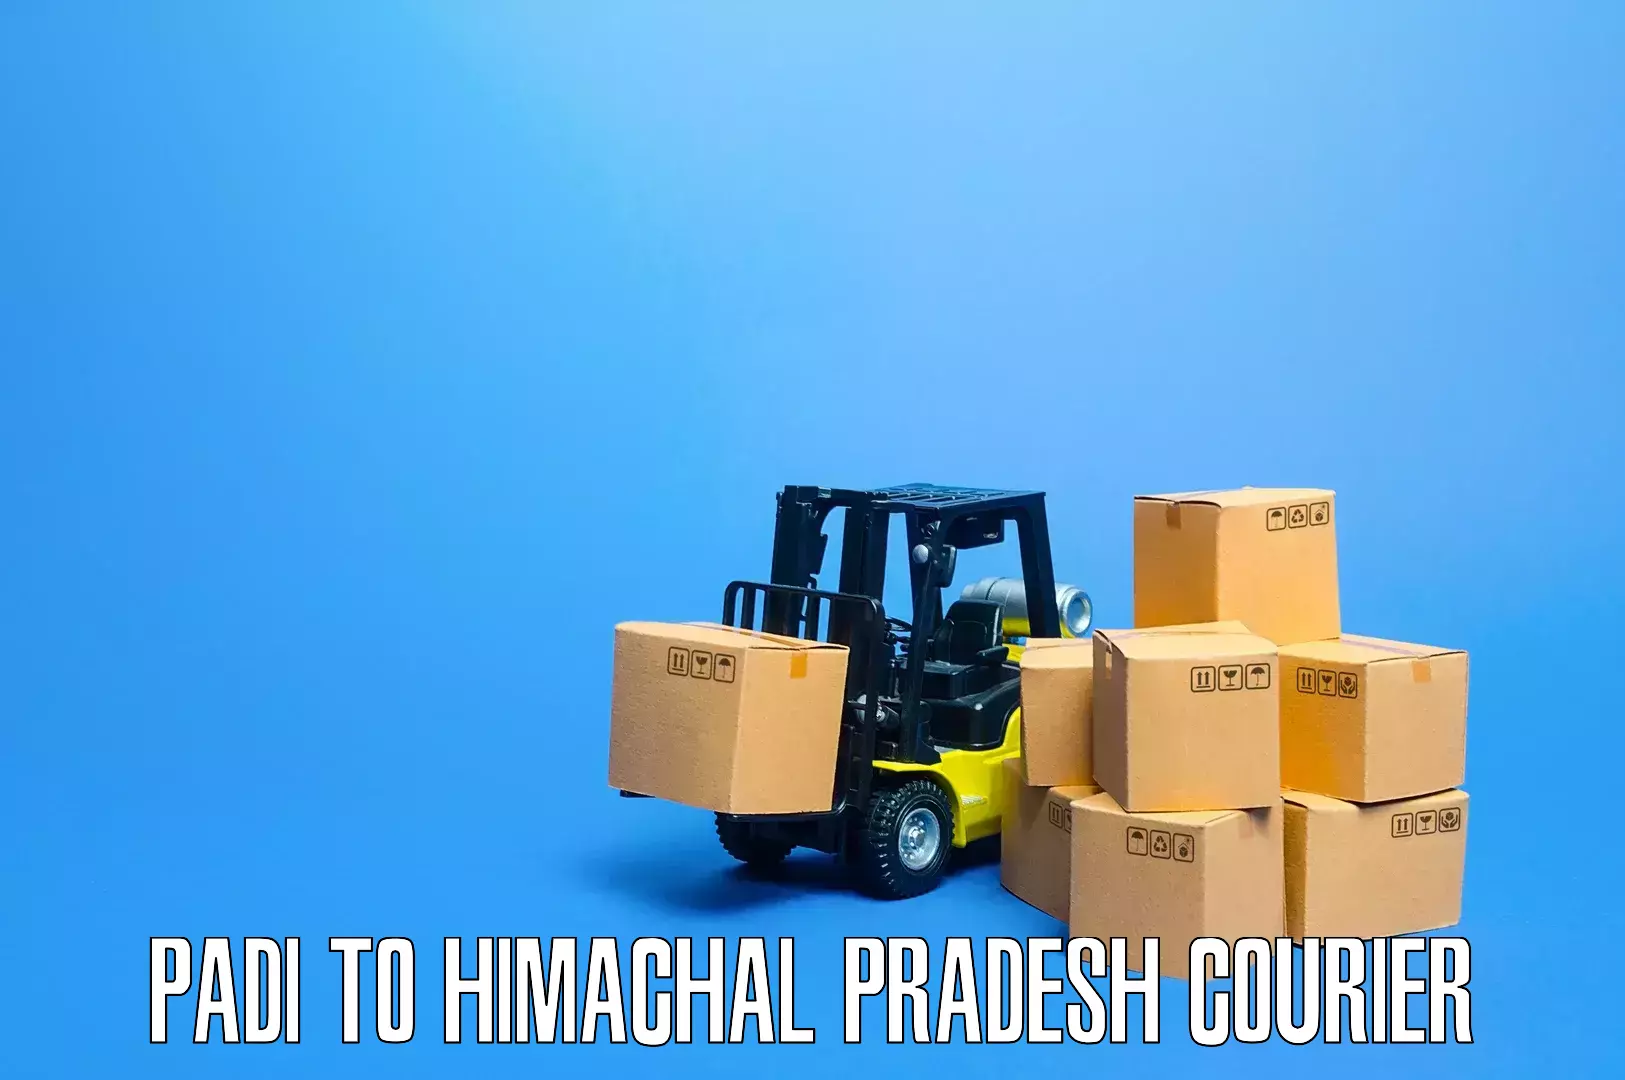 Furniture delivery service Padi to Himachal Pradesh